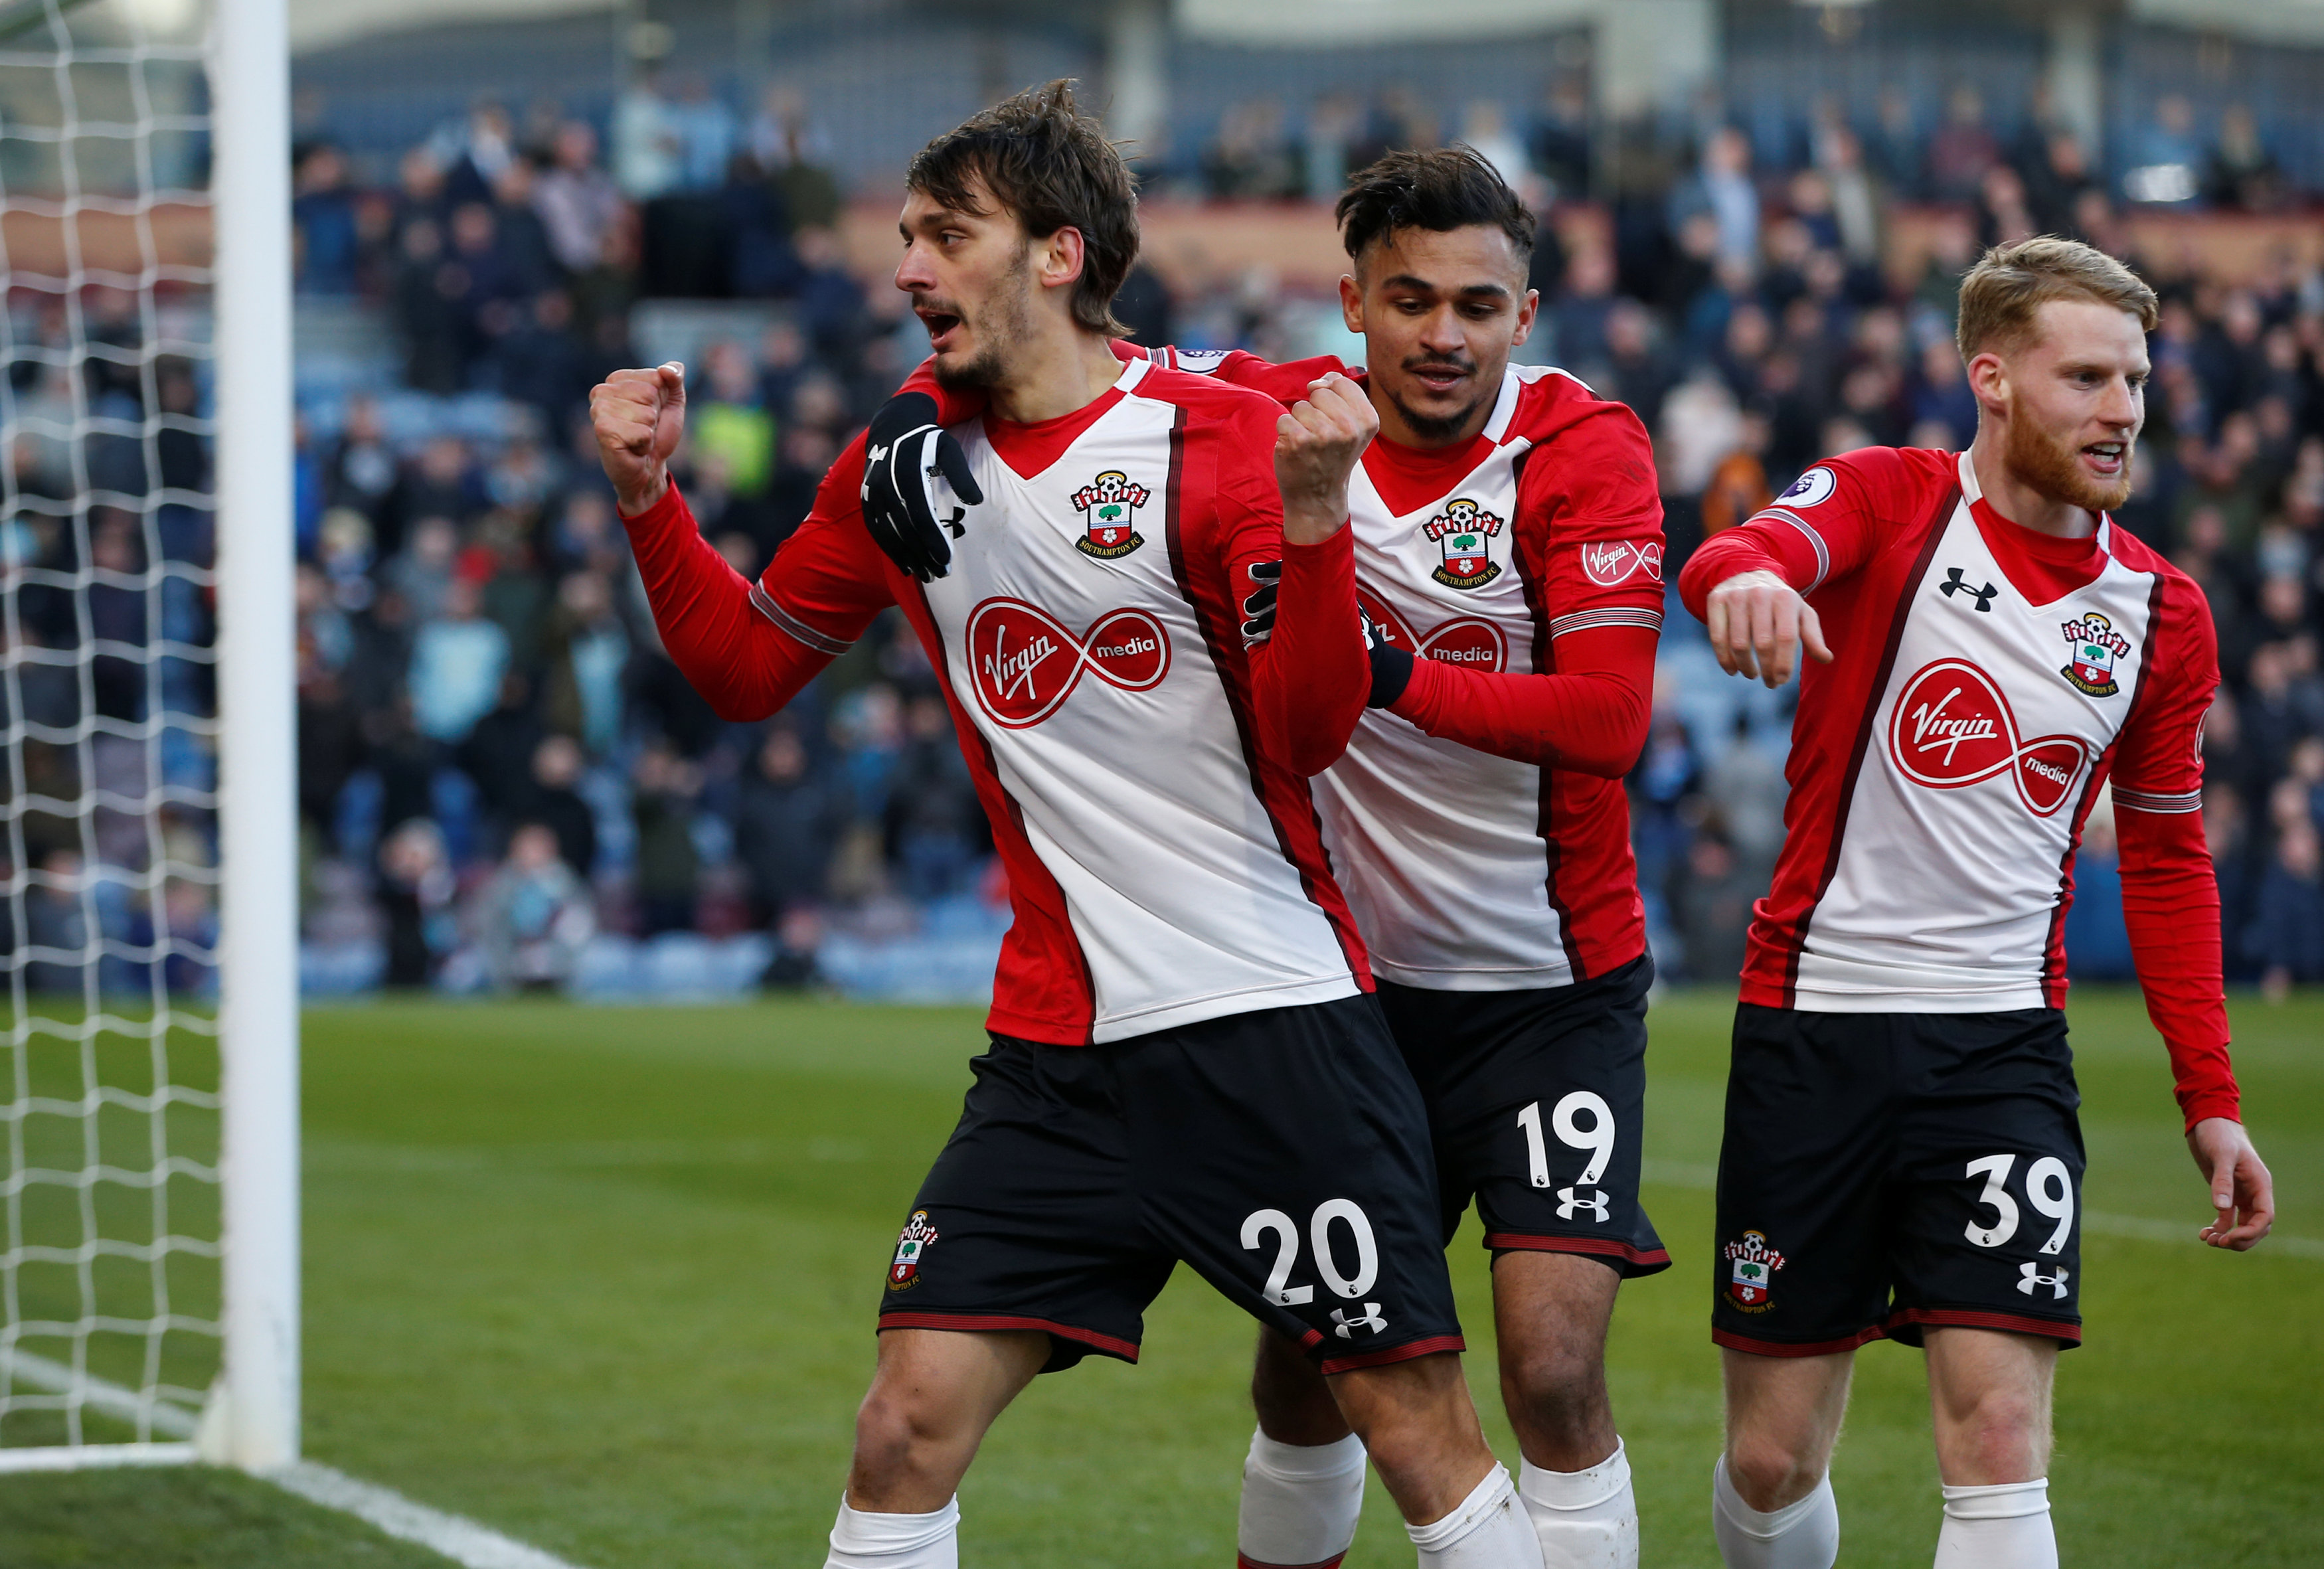 Football: Gabbiadini secures vital point for Southampton at Burnley